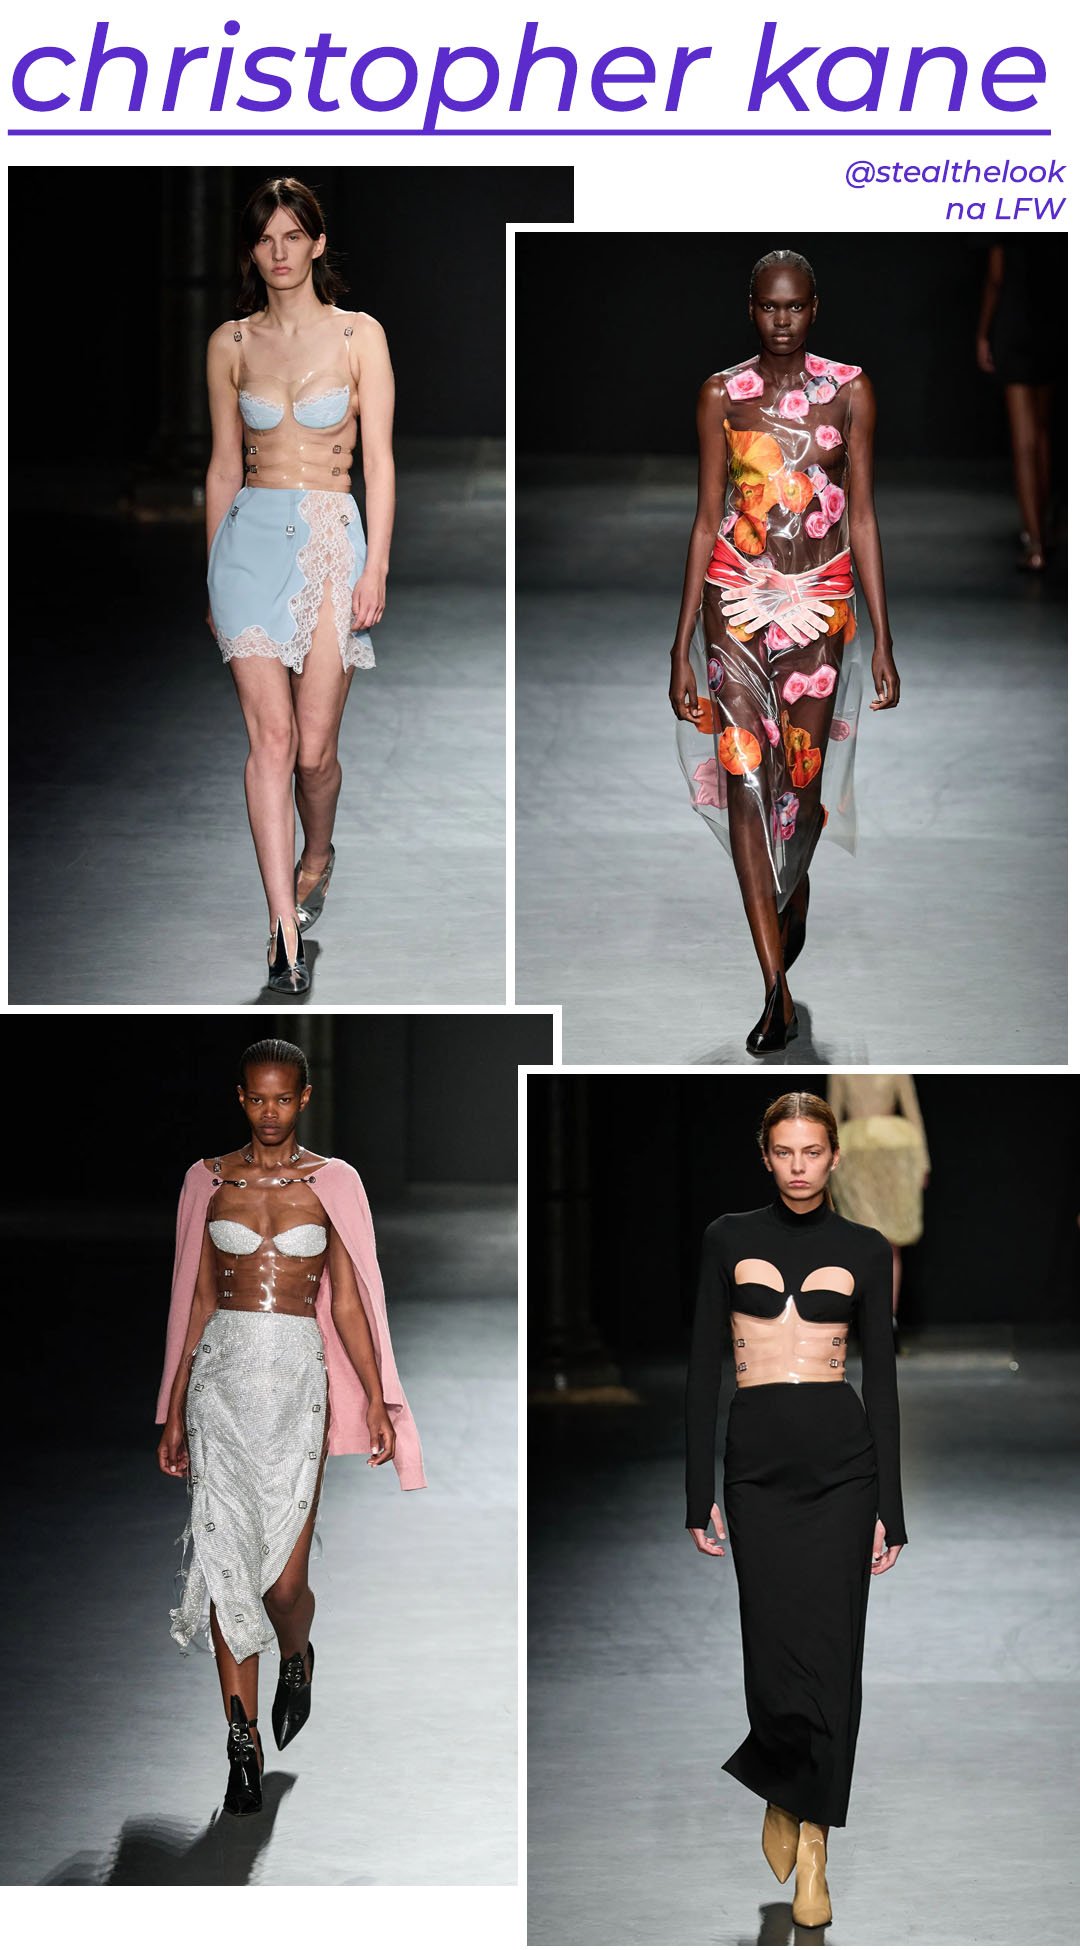 Christopher Kane S/S 2023 - roupas diversas - London Fashion Week - Primavera - modelo andando pela passarela - https://stealthelook.com.br